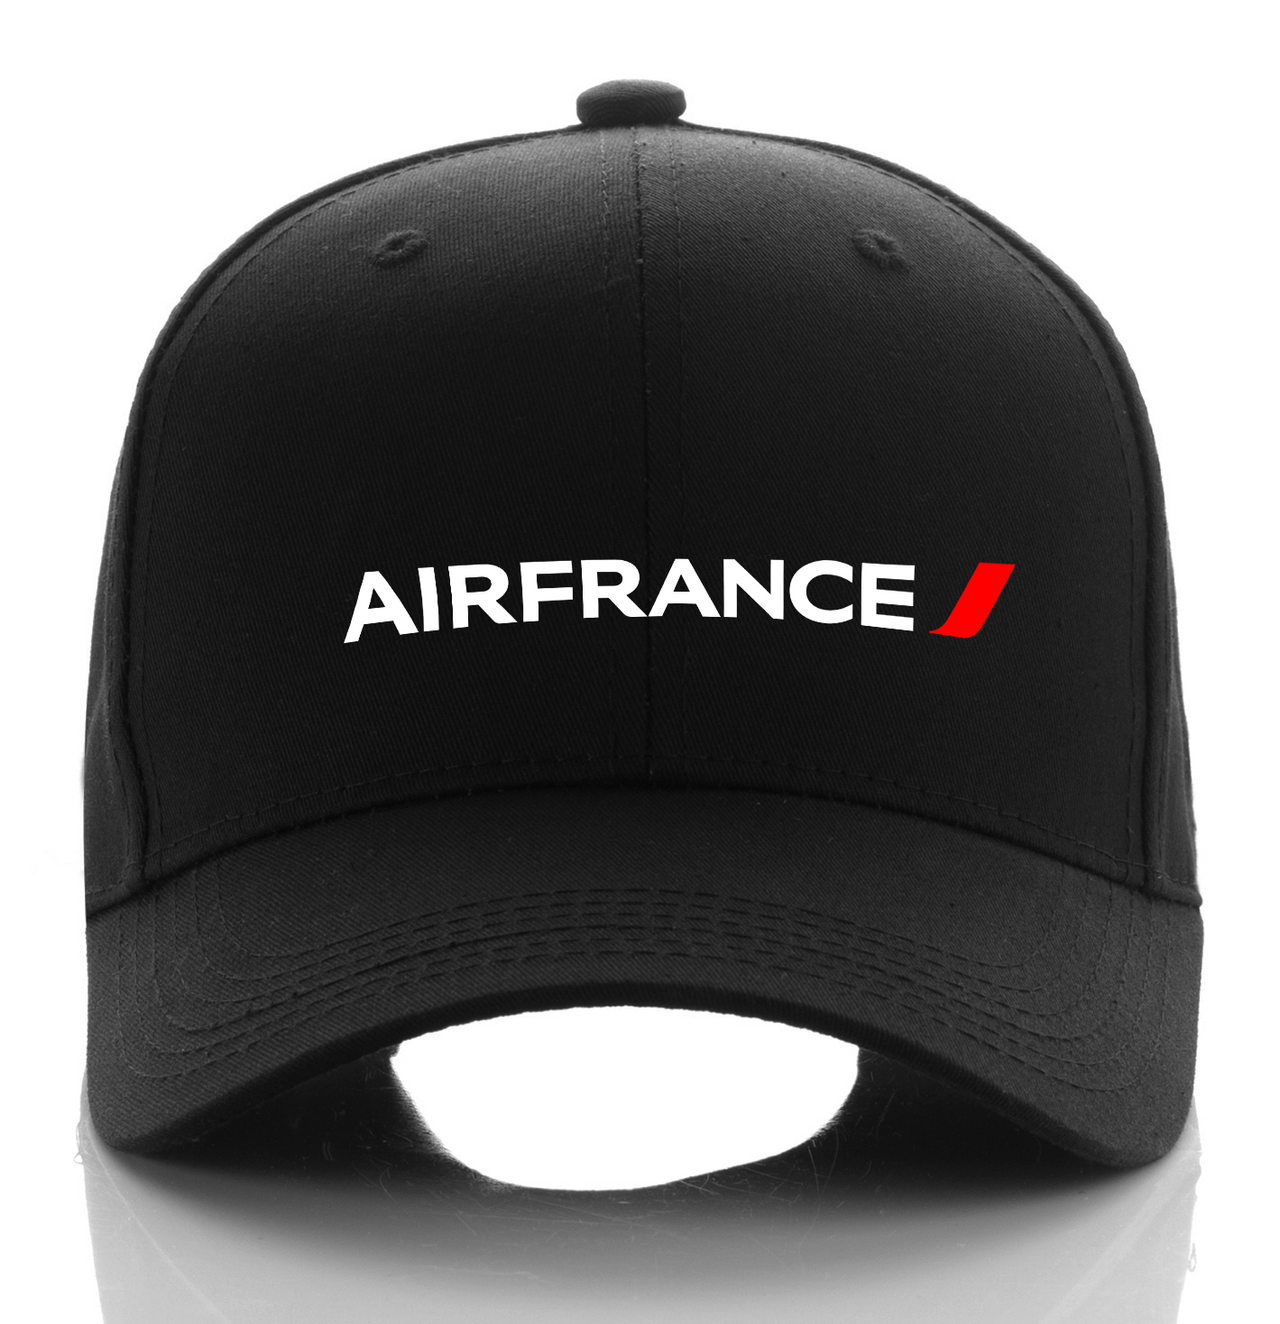 FRANCE AIRLINE DESIGNED CAP